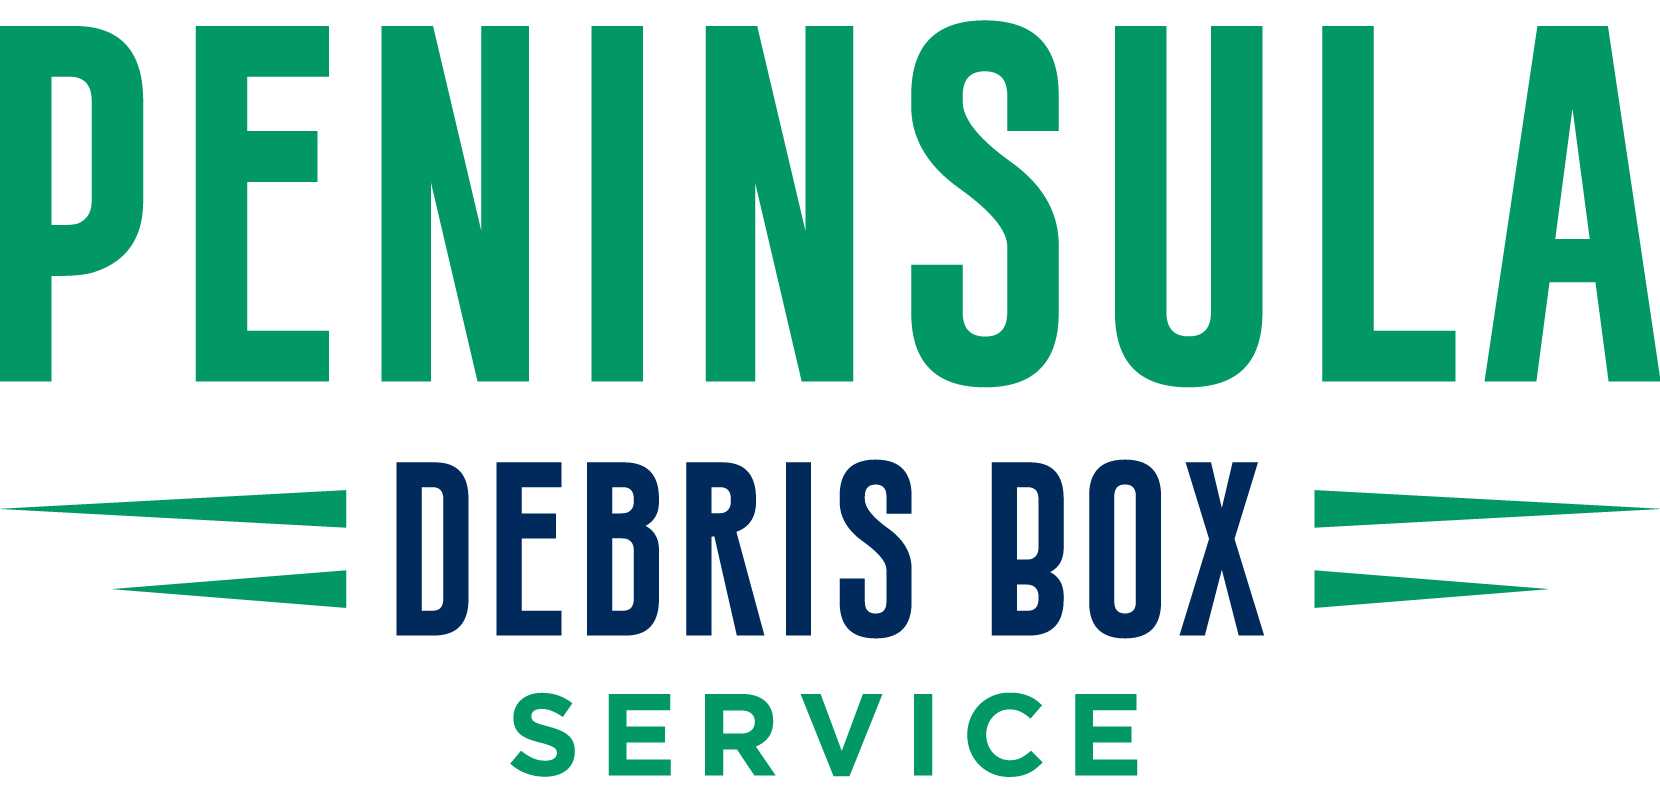 Welcome to Peninsula Debris Box Service